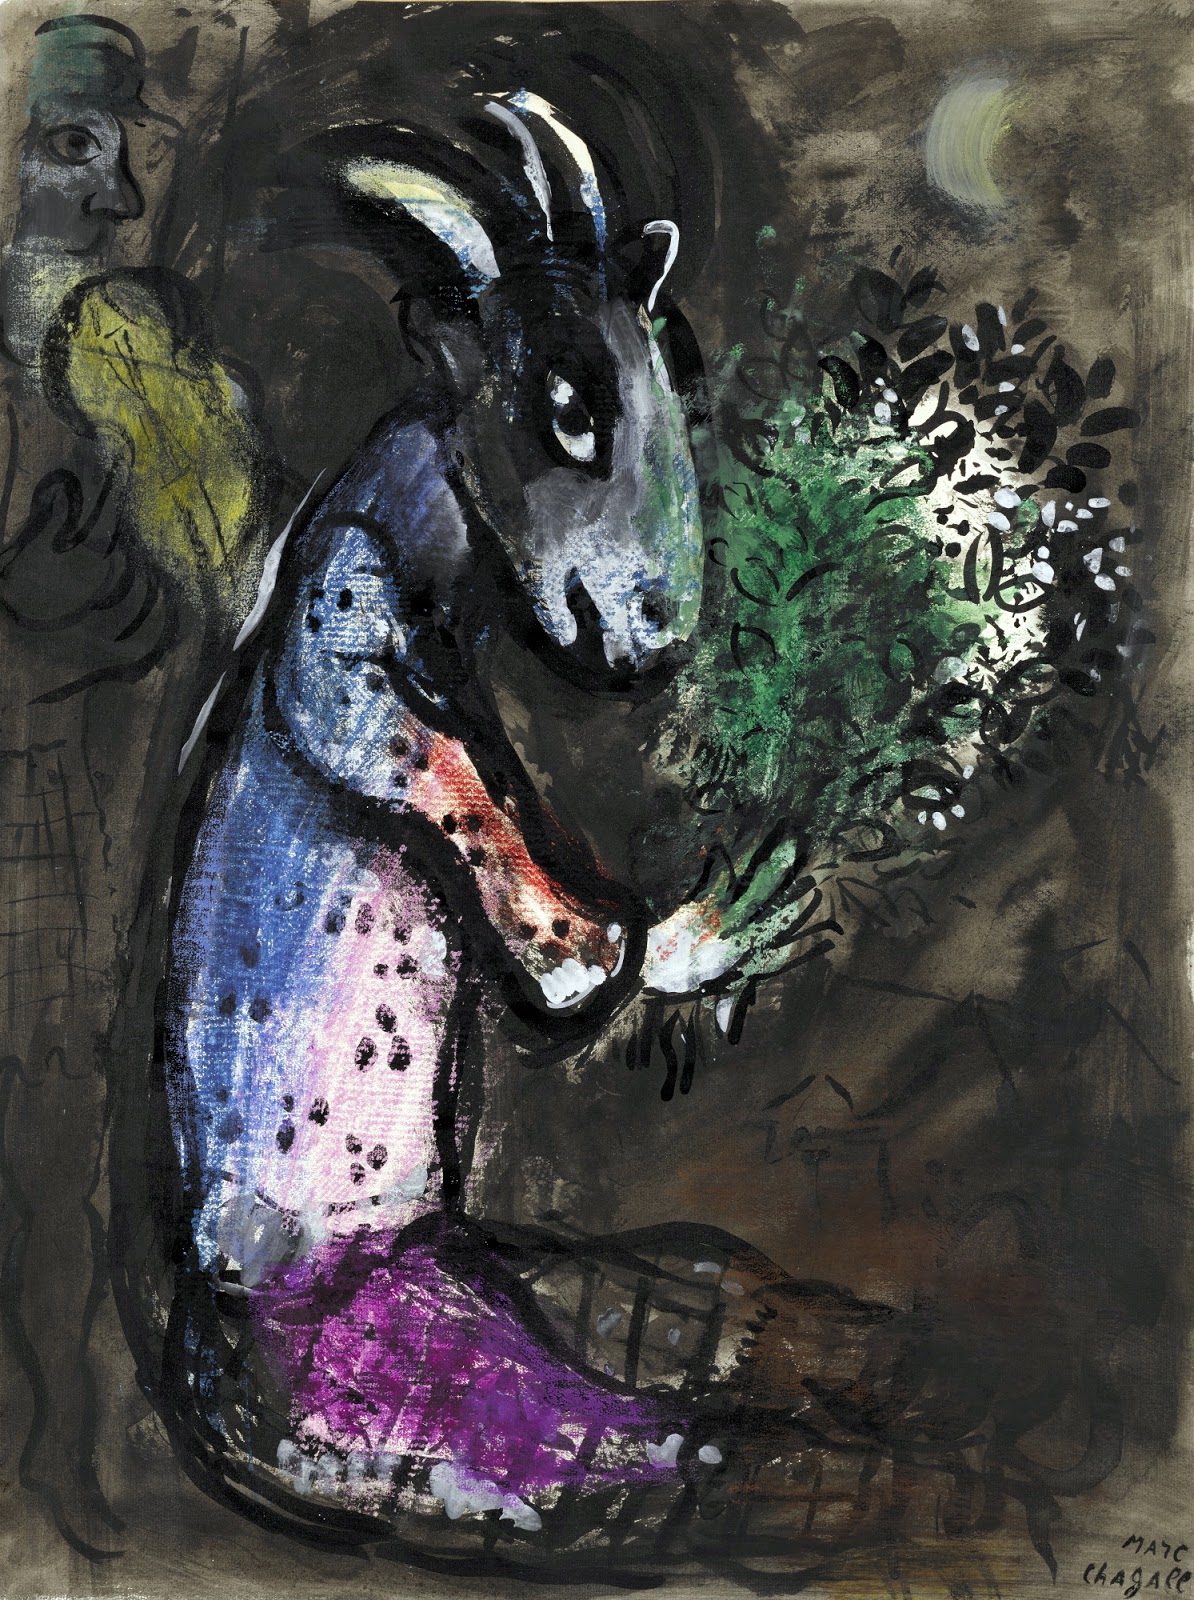 Marc+Chagall-1887-1985 (271).jpg